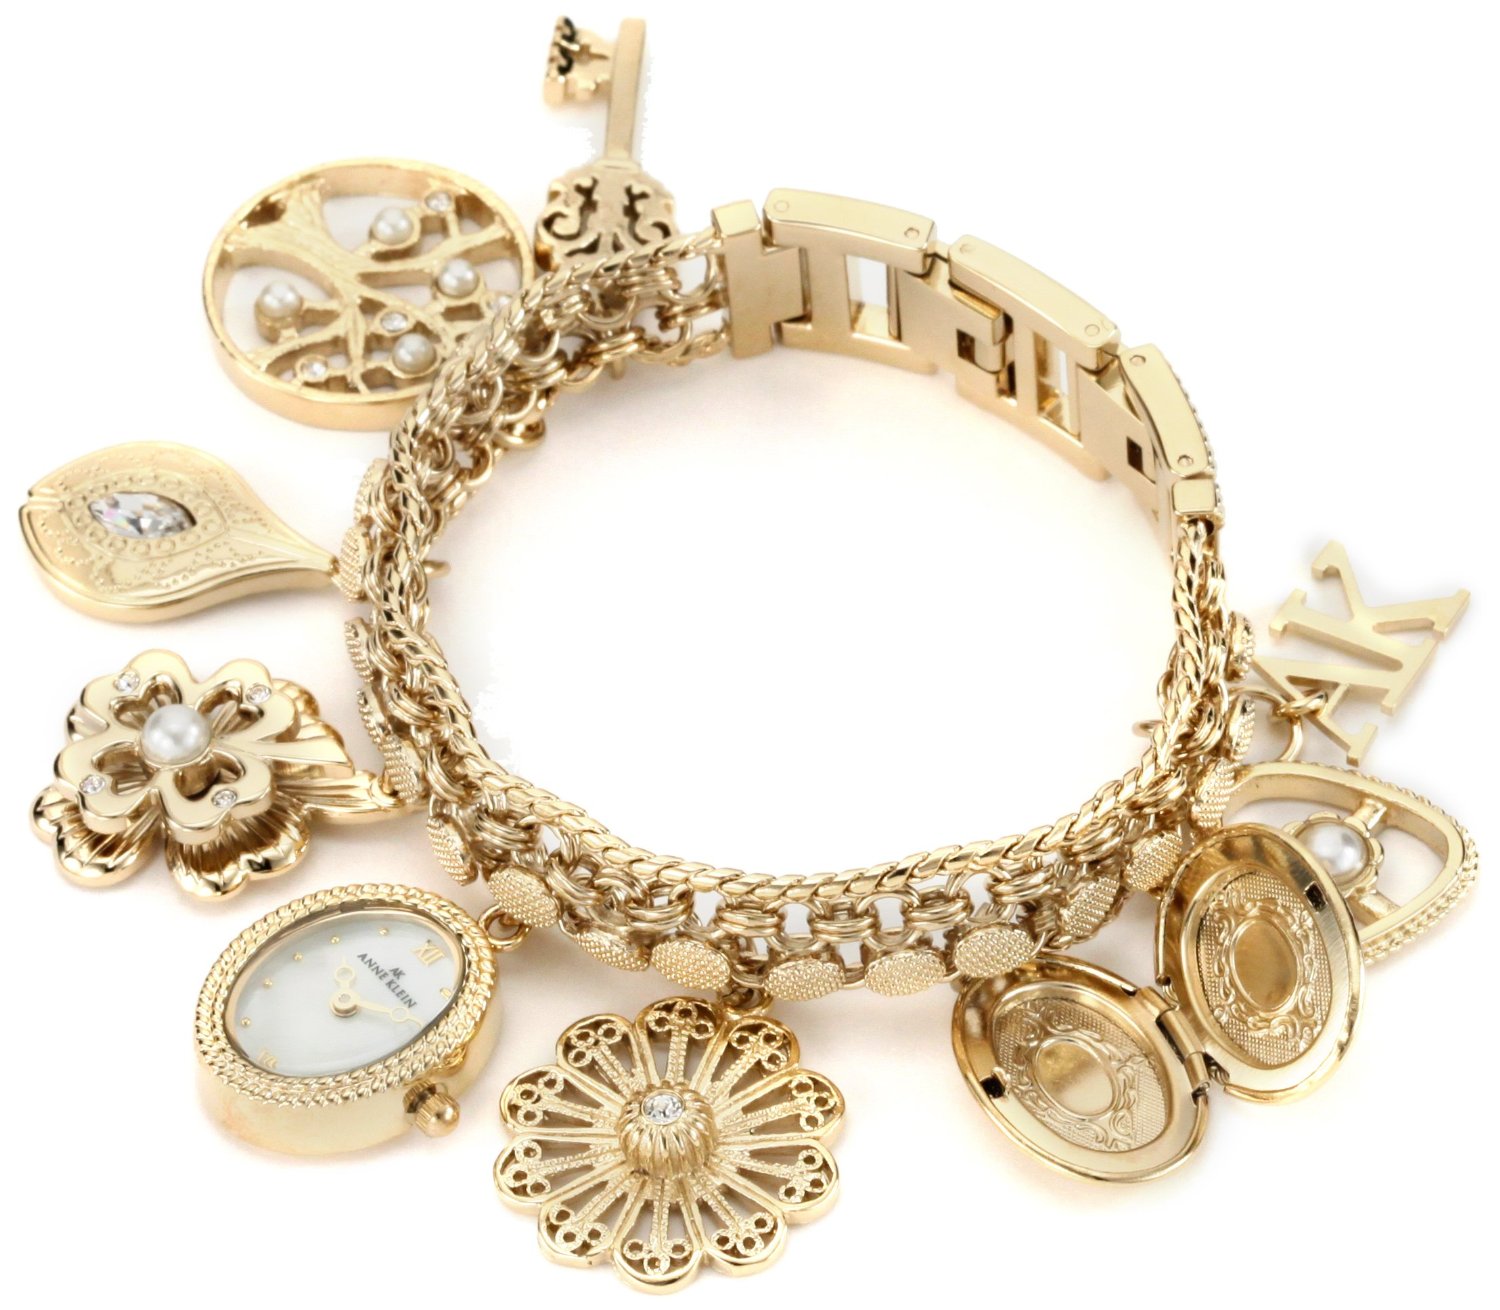 AK Anne Klein Women's 10-8096CHRM Swarovski Crystal Accented Gold-Tone Charm Bracelet Watch $73